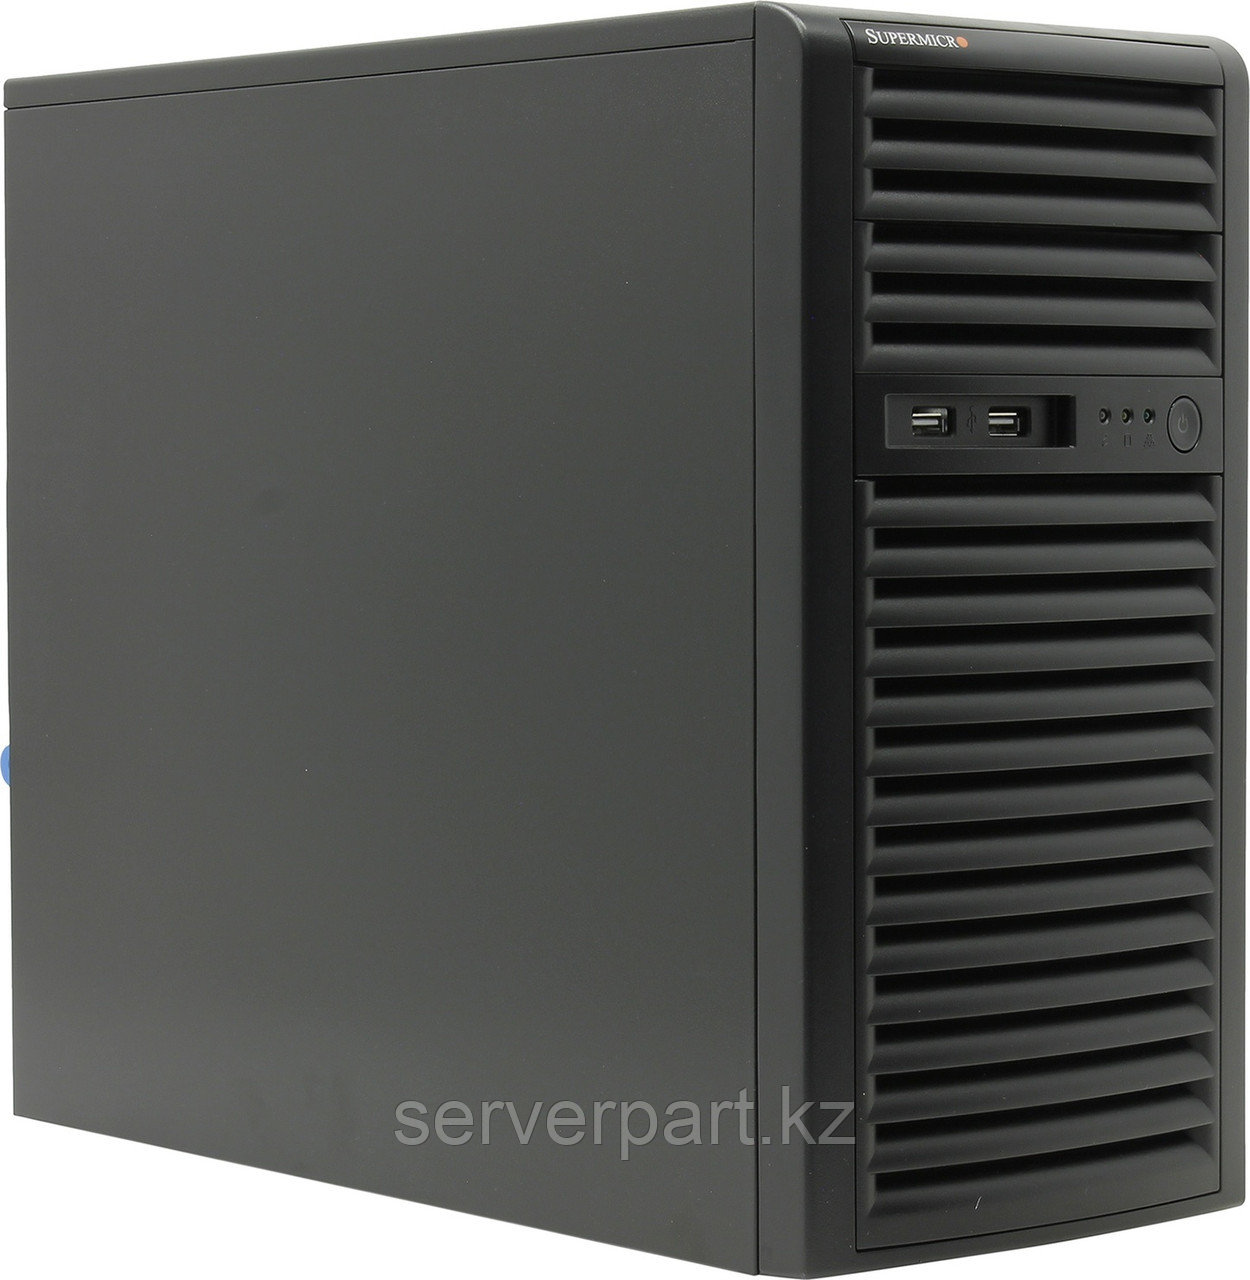 Сервер Supermicro SYS-5039D Tower 4LFF/4-core intel Xeon E3-1220v6 3GHz/32GB EUDIMM/2x240GB SSD RI Hyb